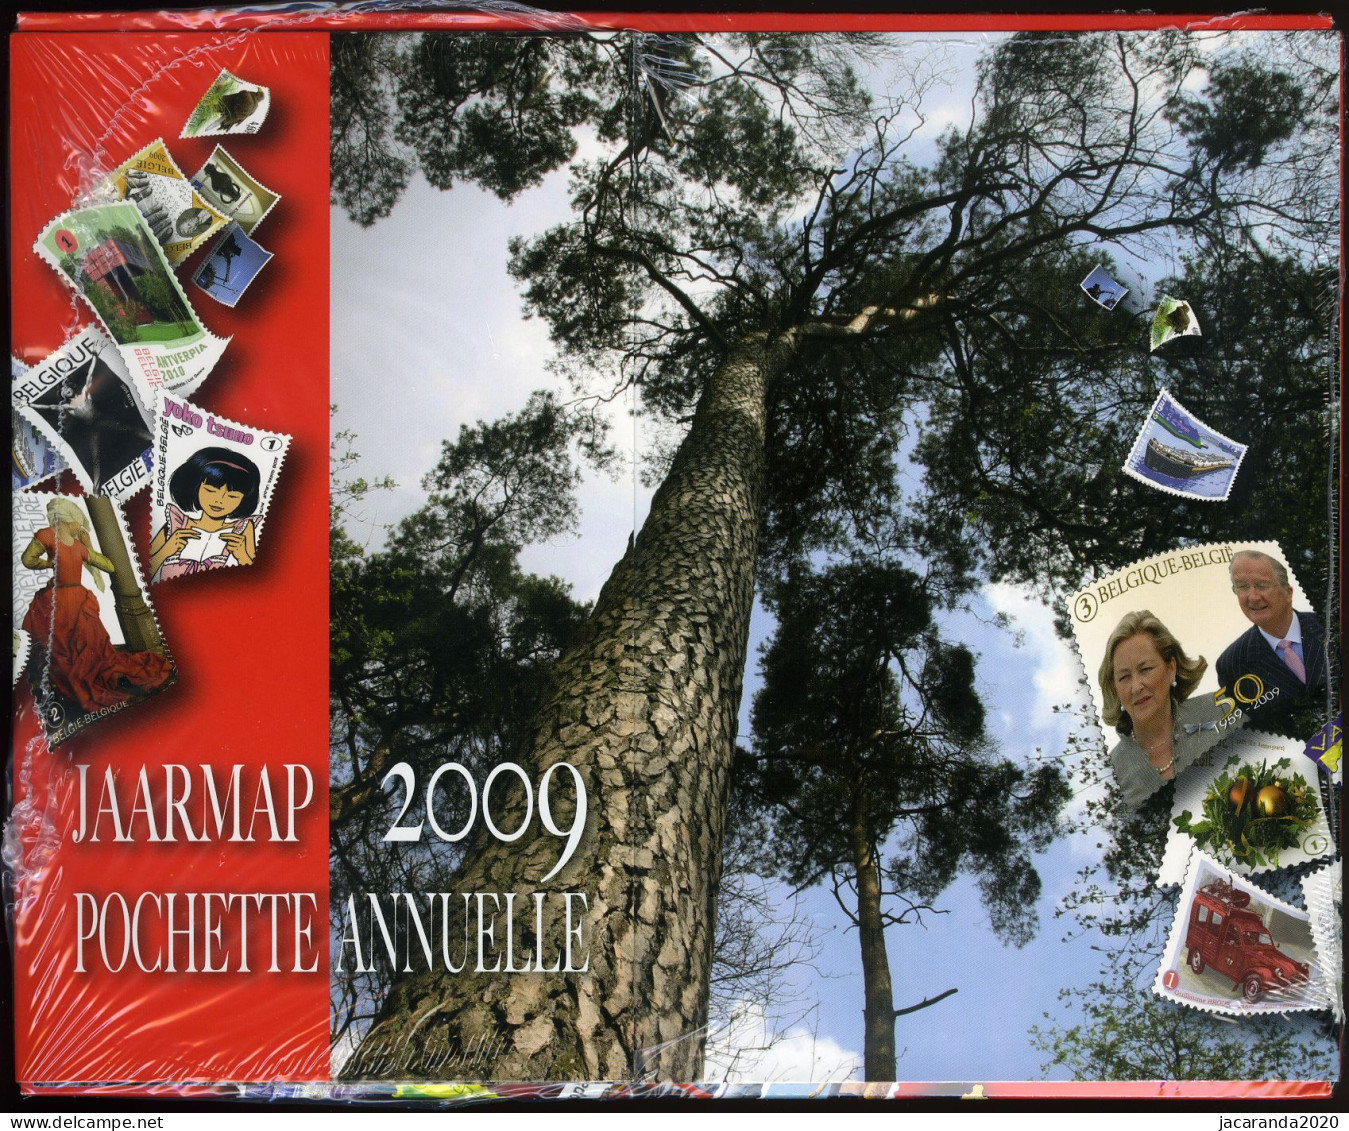 België 2009 - Jaarmap - Pochette Annuelle - Met Zwart-wit Velletje Van Europa - Originele Verpakking - Scellé - Sealed - Jahressätze